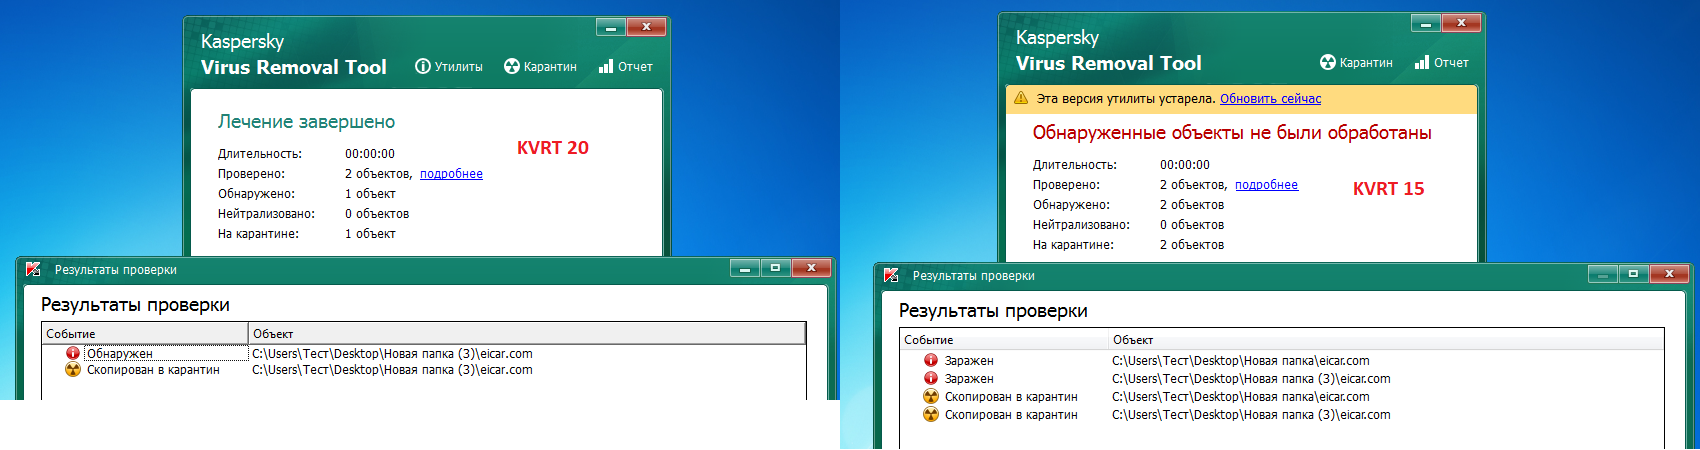 Kvrt virus removal tool. Kvrt2020. Kvrt2020_data. KVRT. Kvrt2020_data что это за папка в Windows 10.